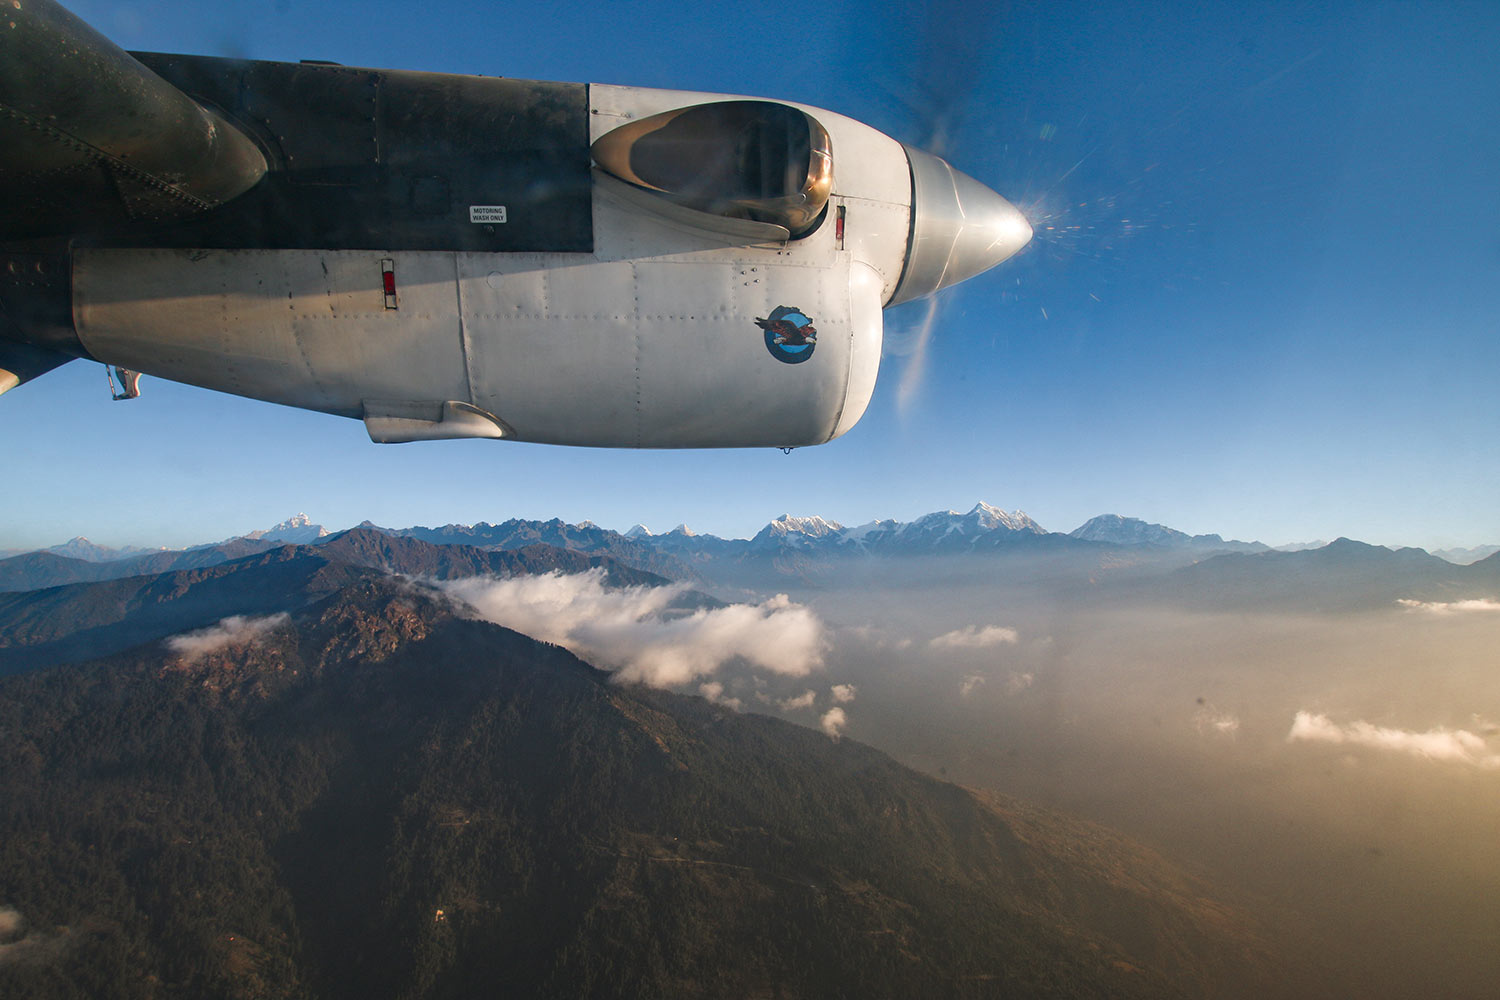 Vol d'avion vers Lukla, Himalayas, Népal / Flight to Lukla, Himalayas, Nepal